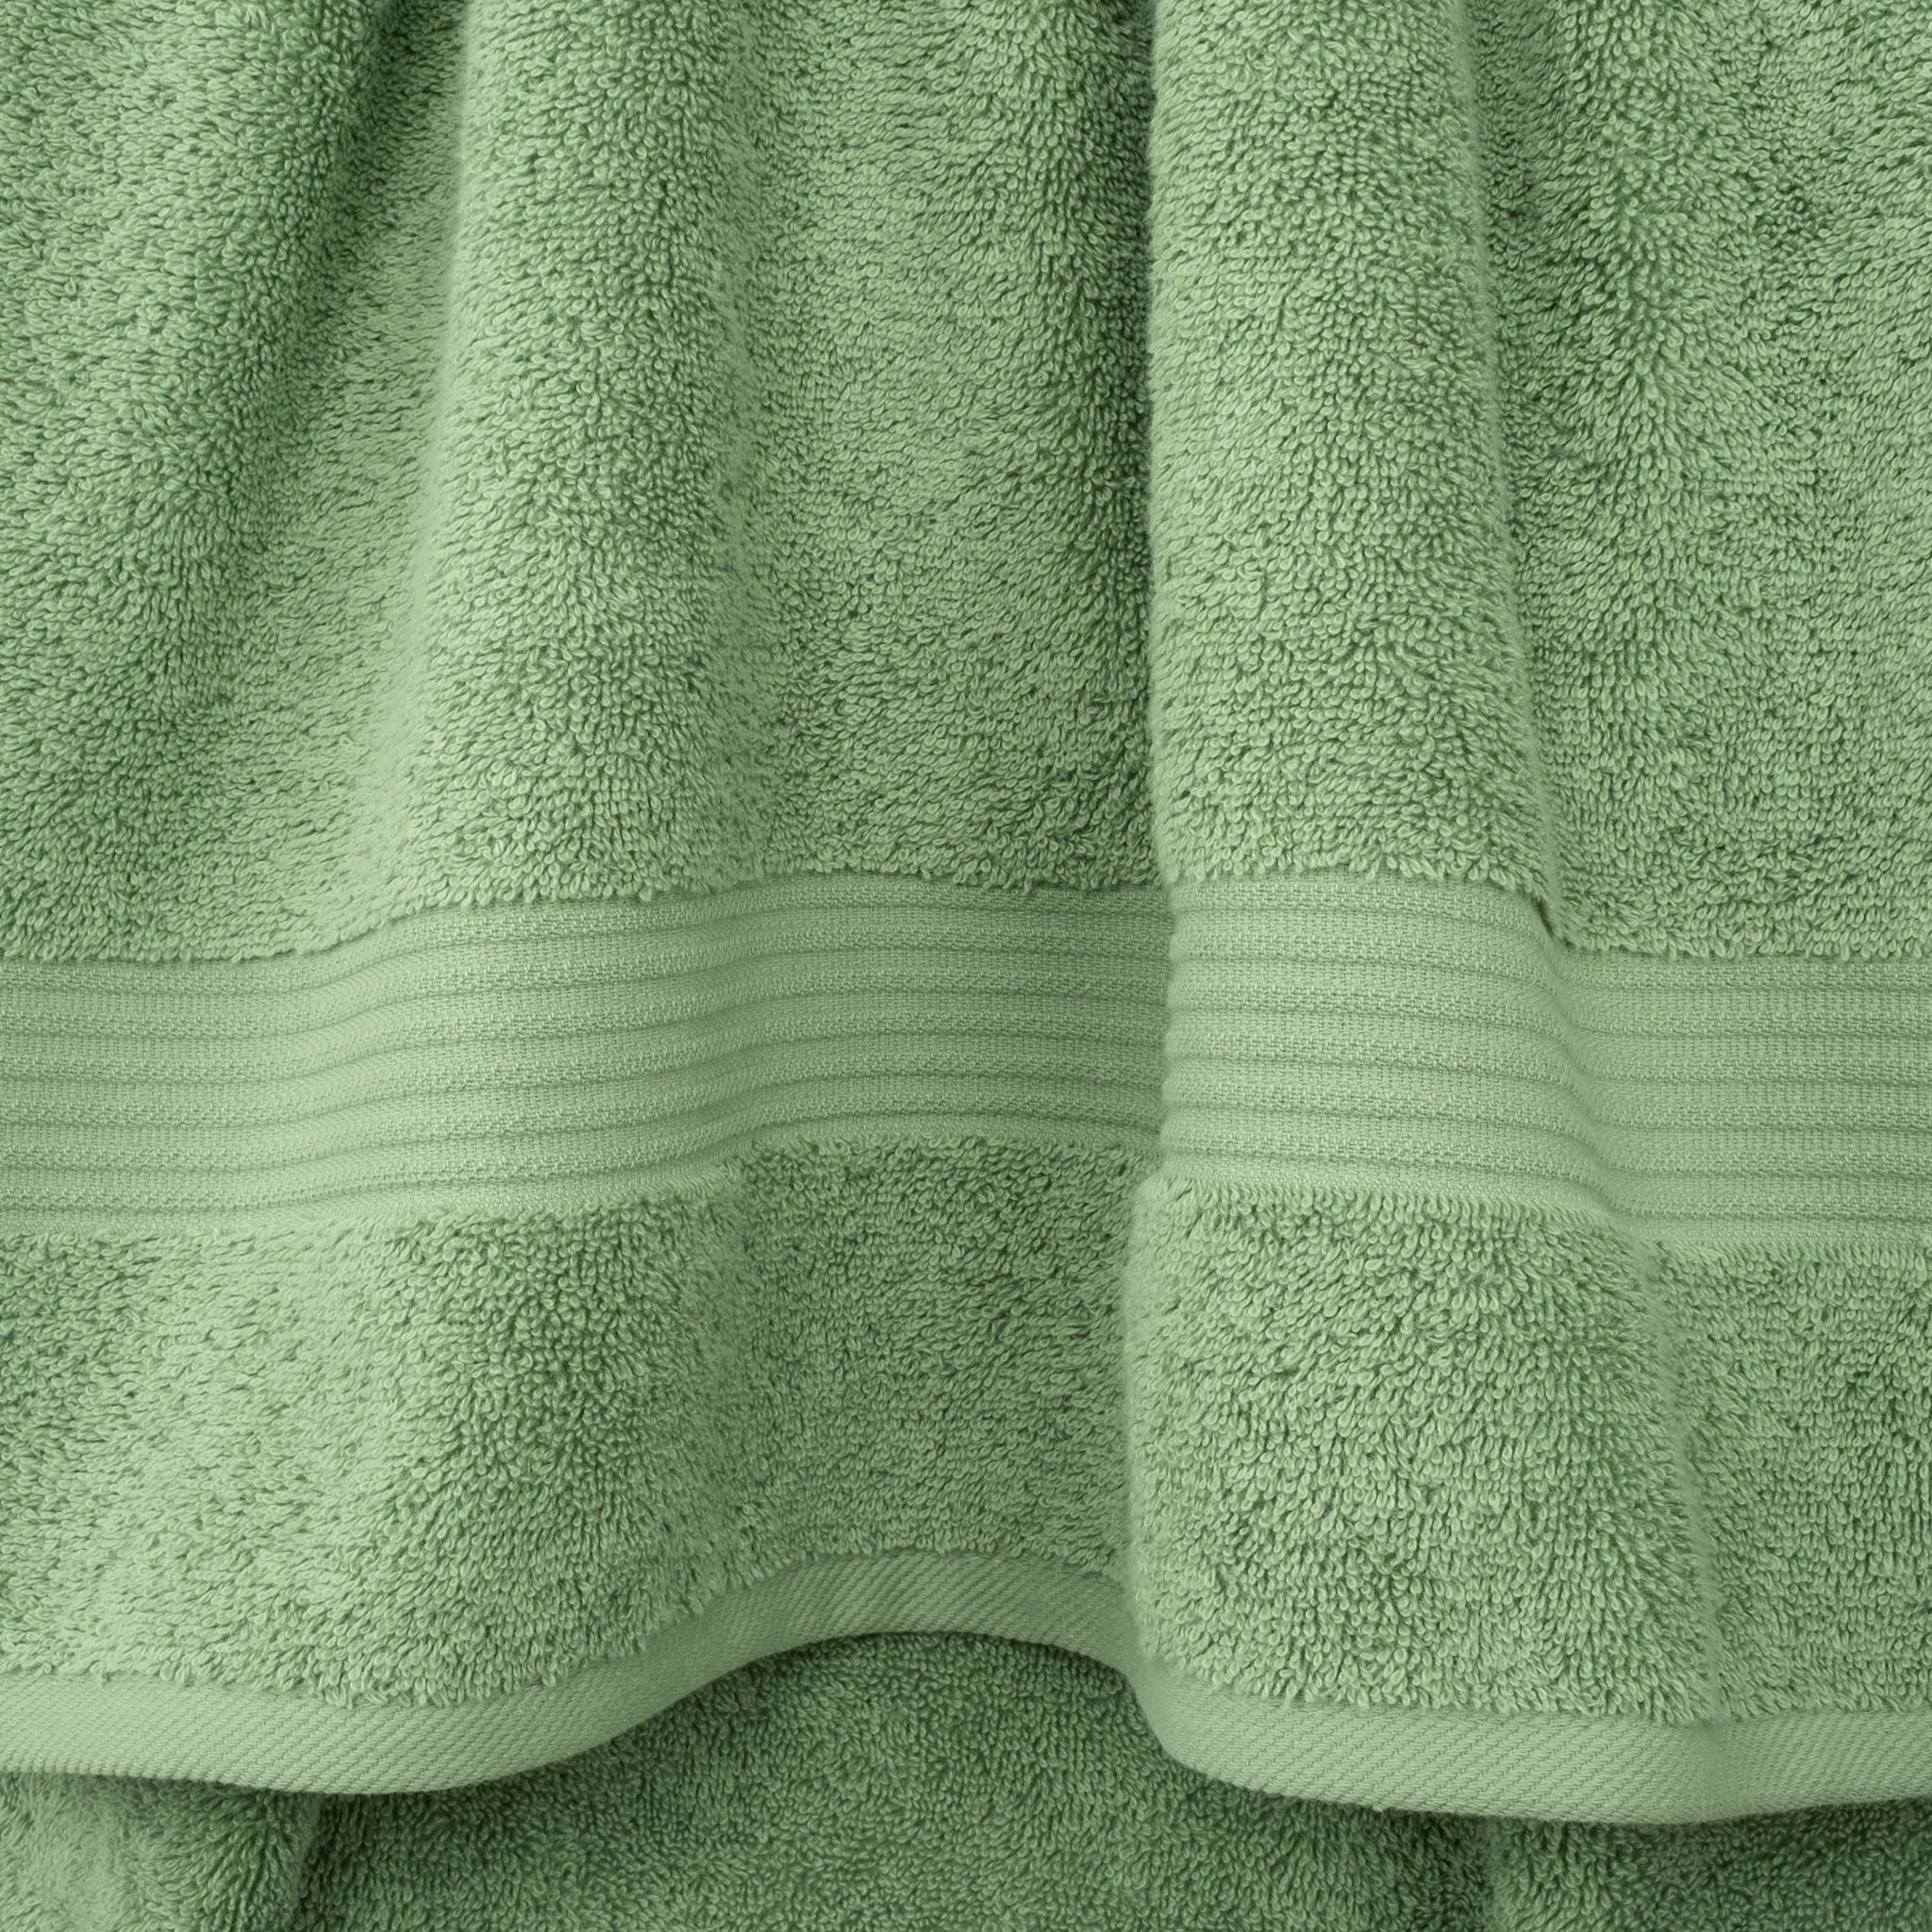 American Soft Linen Bekos 100% Cotton Turkish Towels, 4 Piece Bath Towel Set -sage-green-03